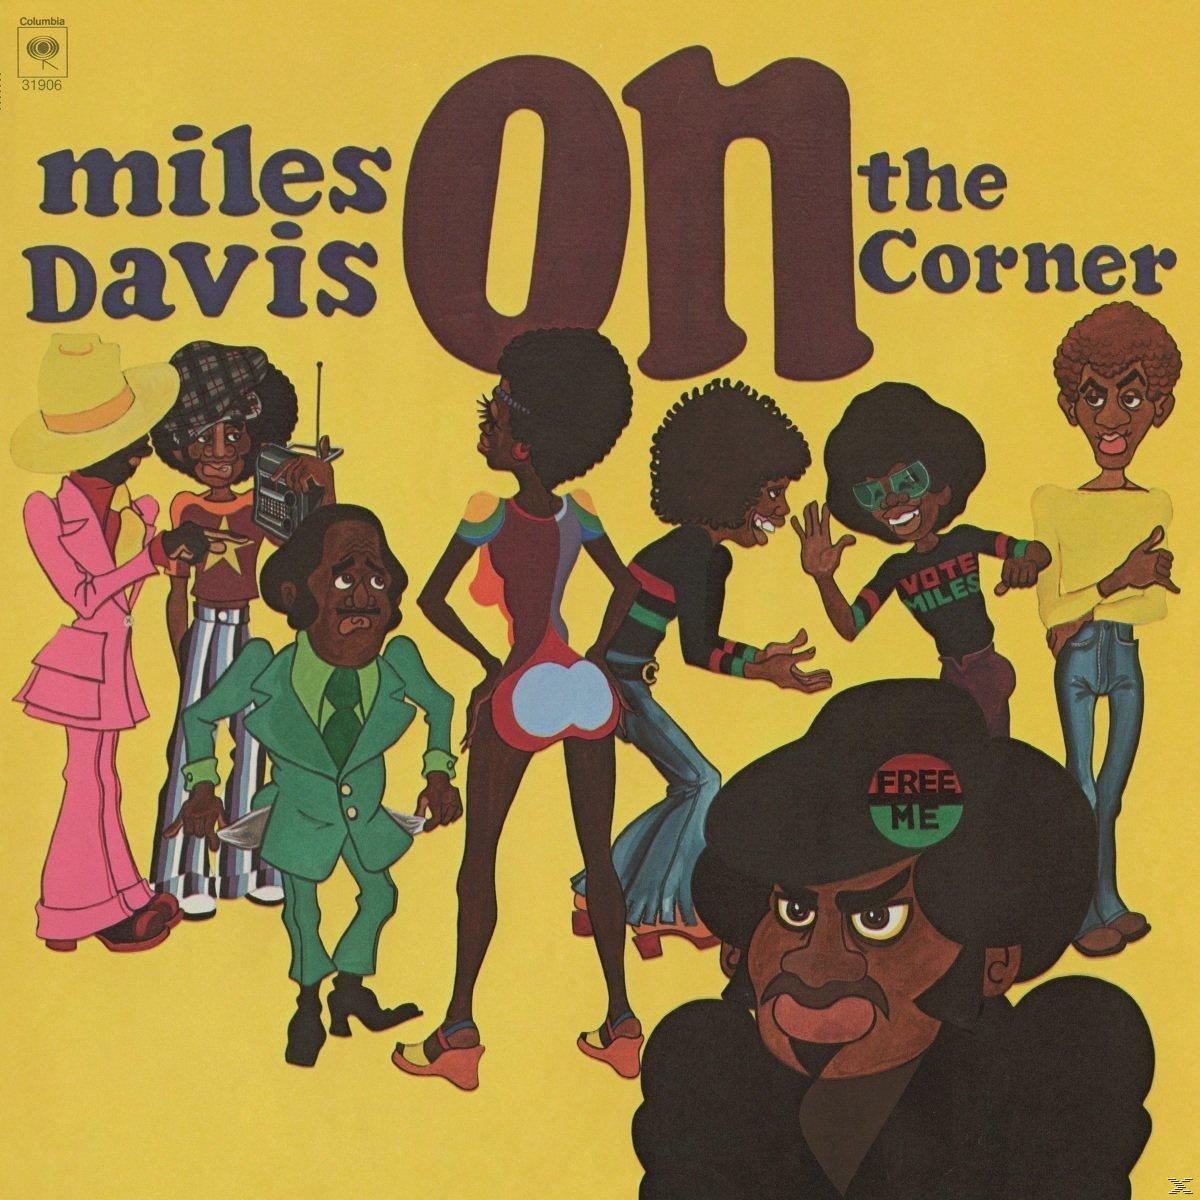 Miles Davis - On (Vinyl) The Corner 